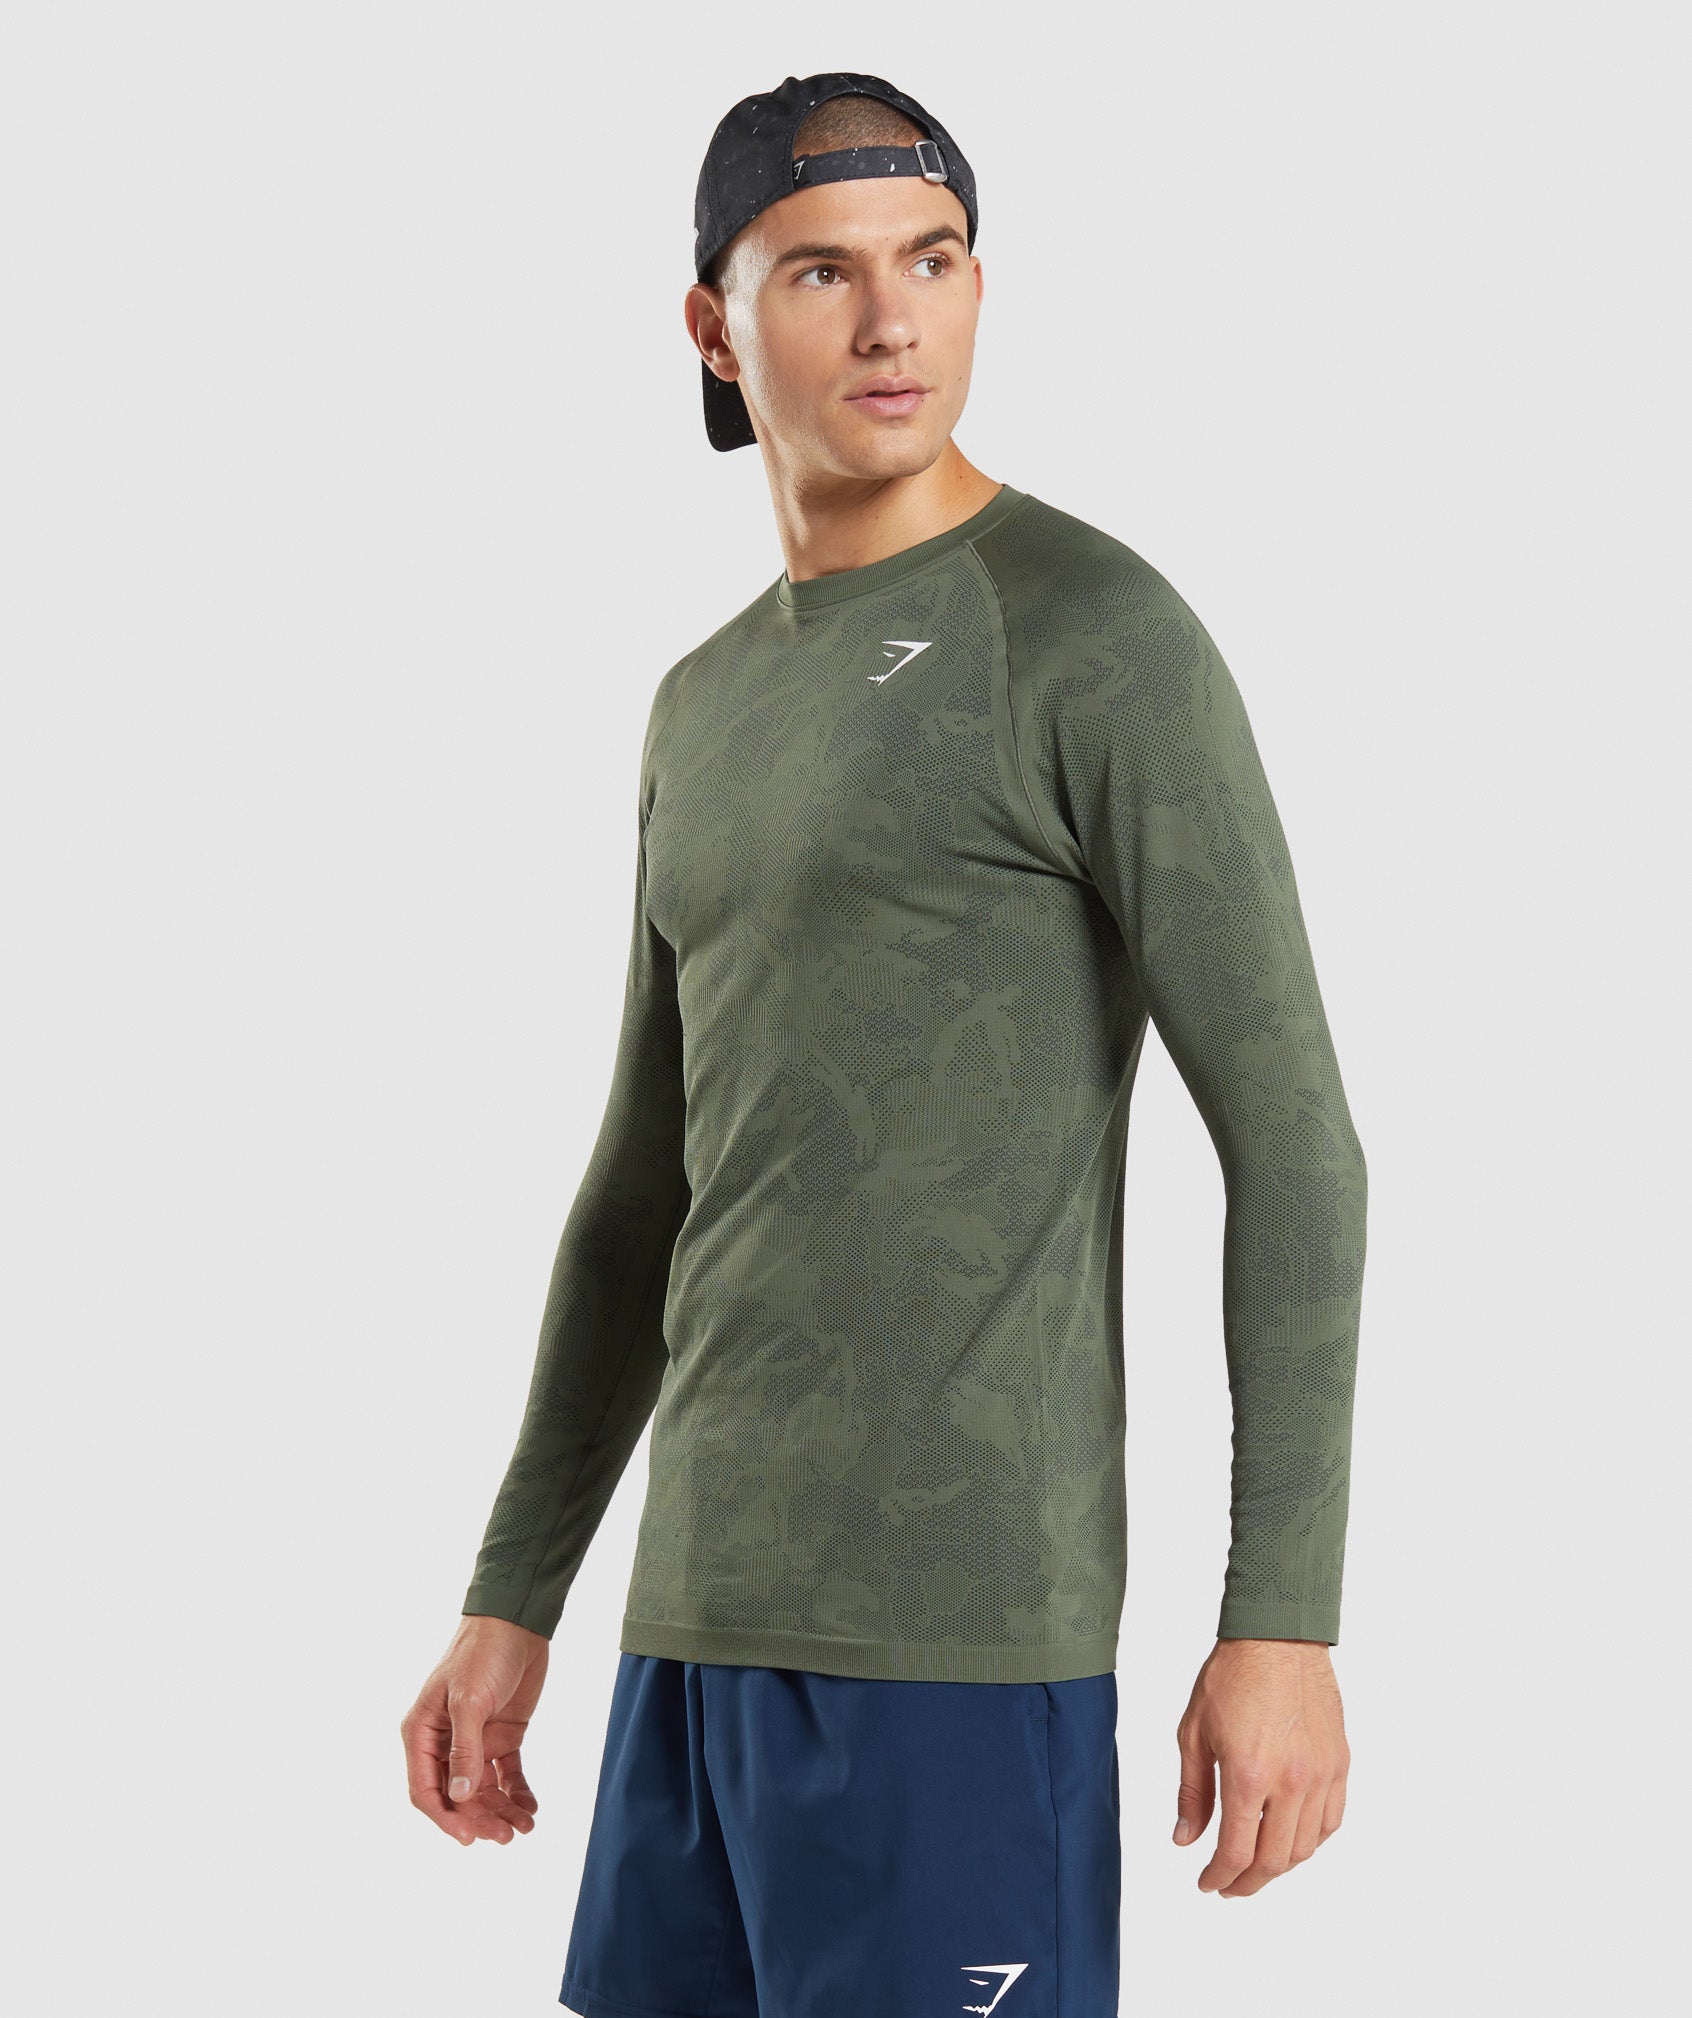 Gymshark 315 Seamless T-Shirt - Core Olive/Marsh Green